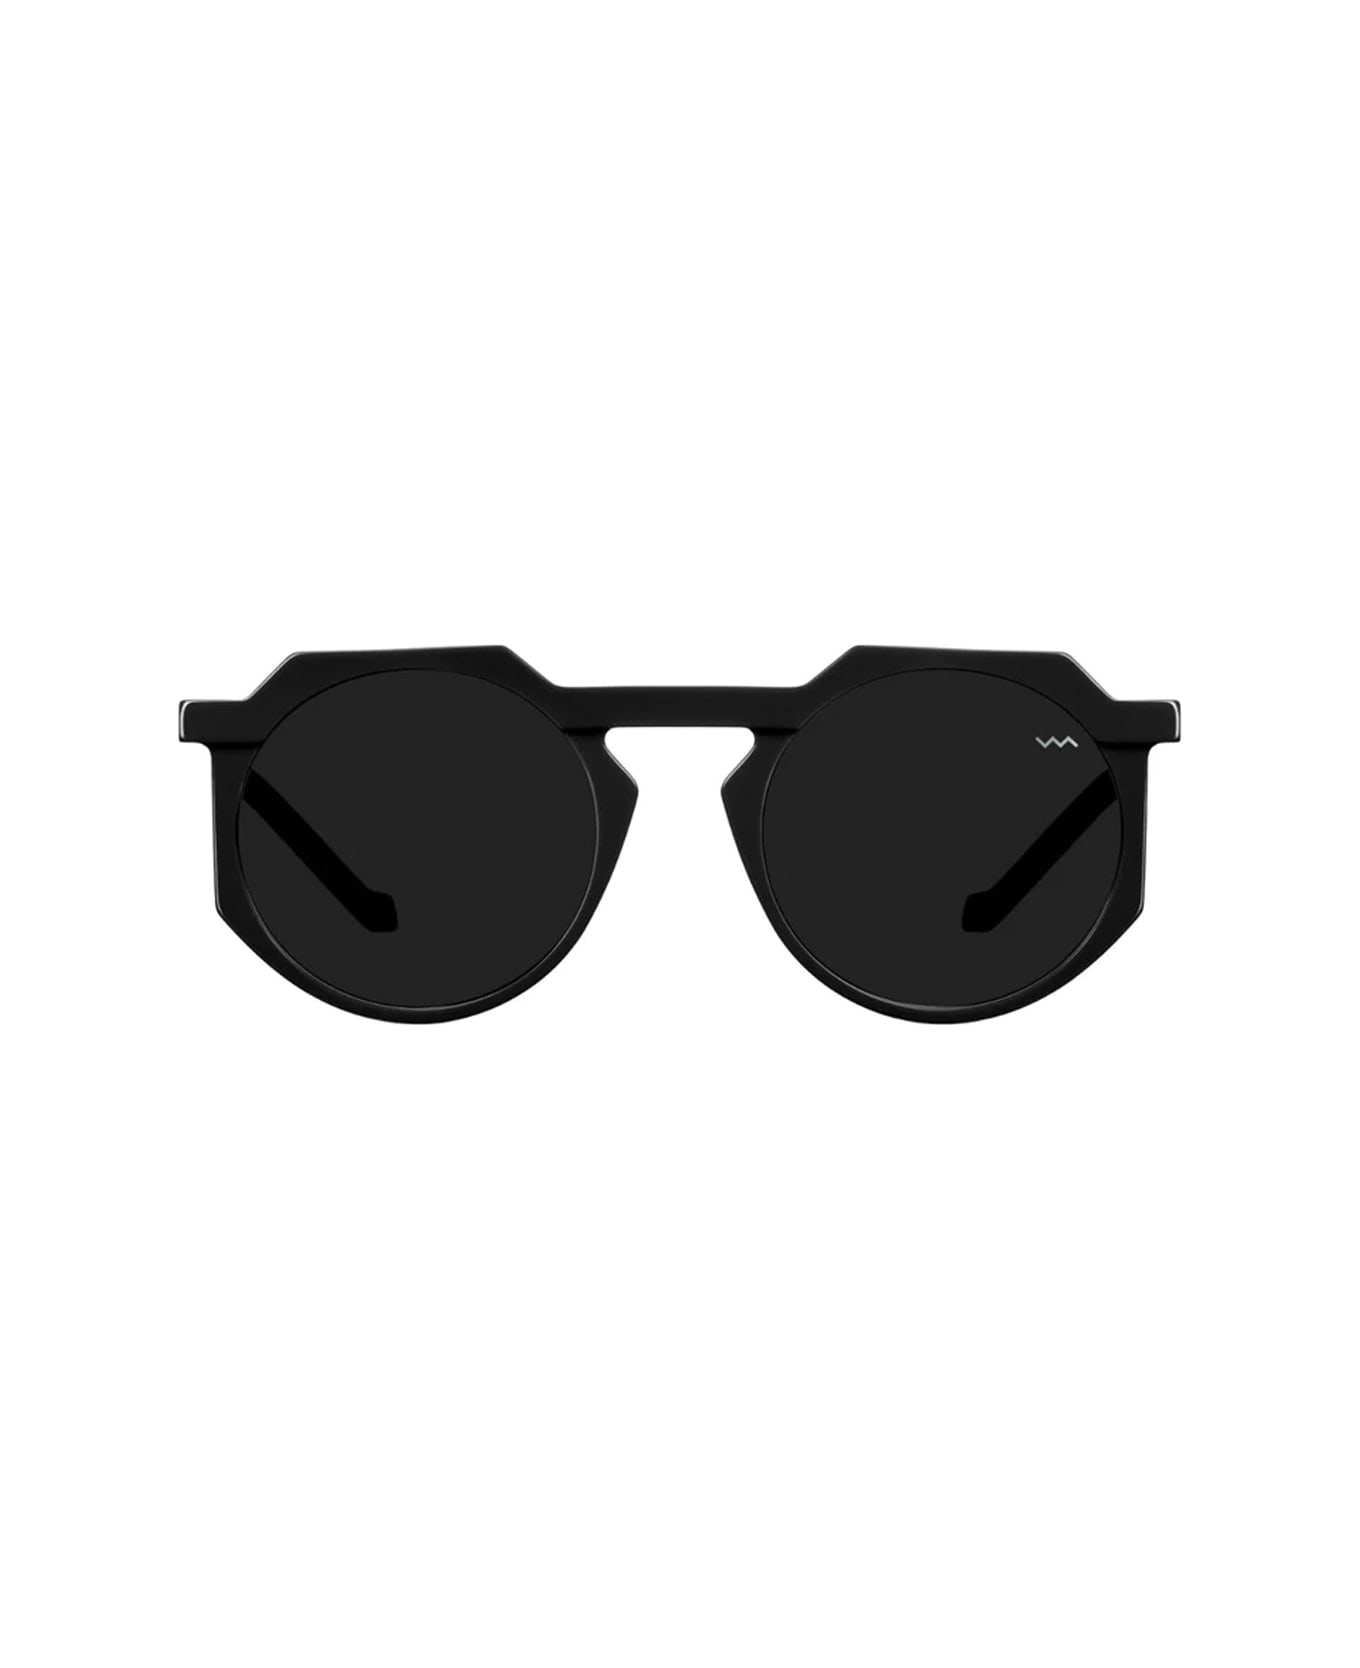 VAVA Wl0028 Black Sunglasses - Nero